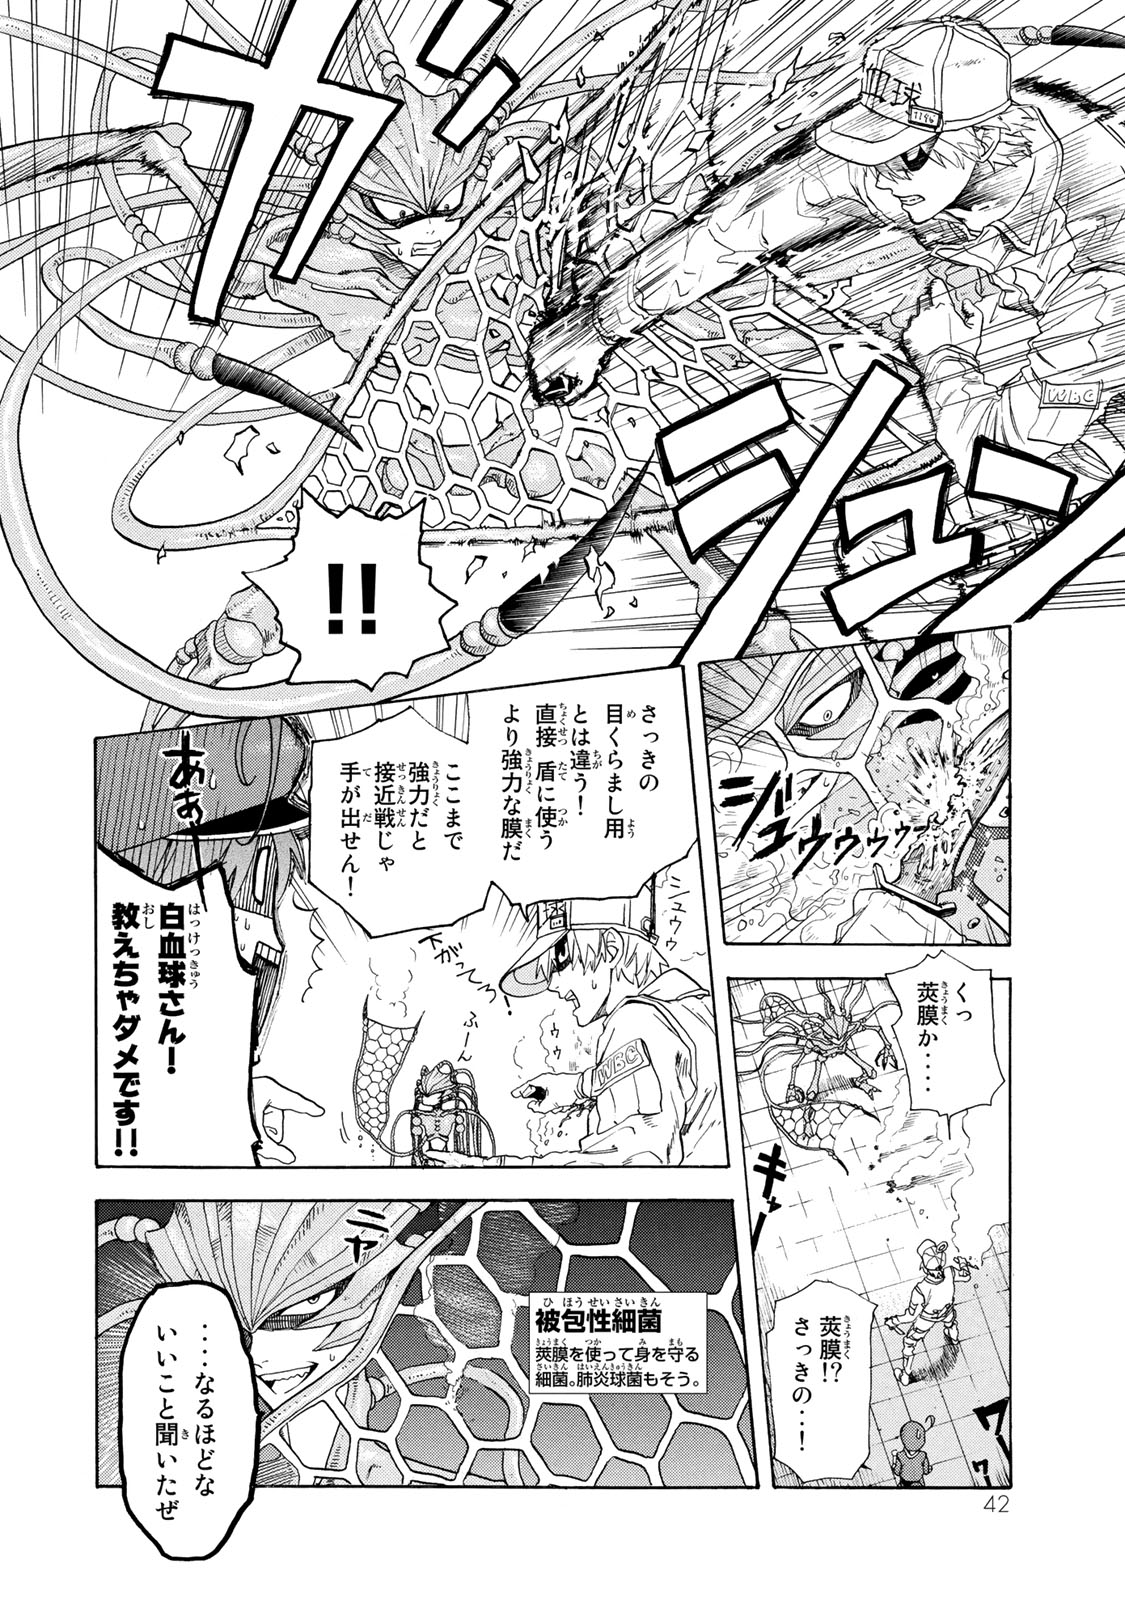 Hataraku Saibou - Chapter 1 - Page 44